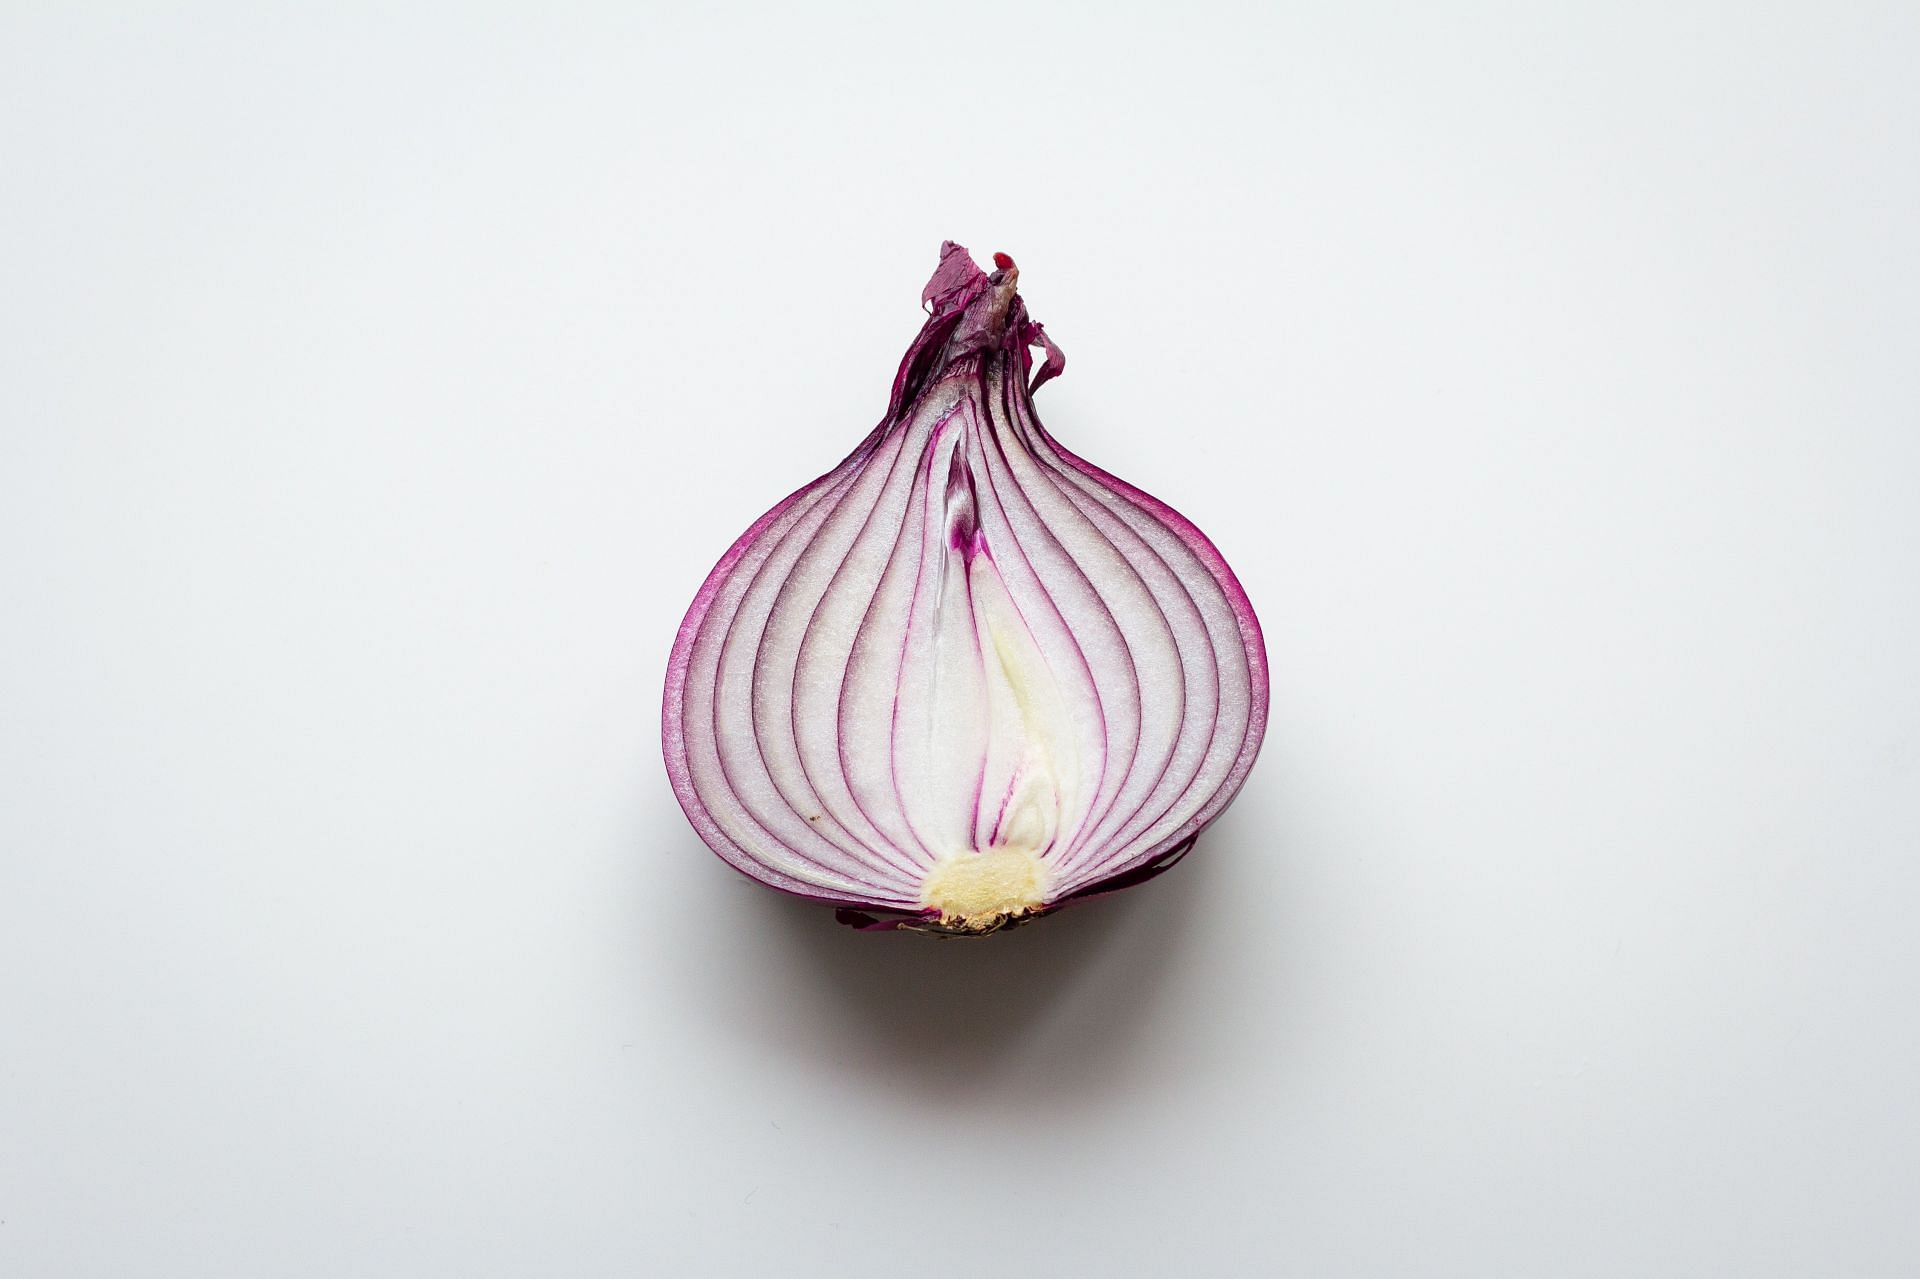 Antioxidant compounds make onions good for you. (Image via Unsplash/K8)